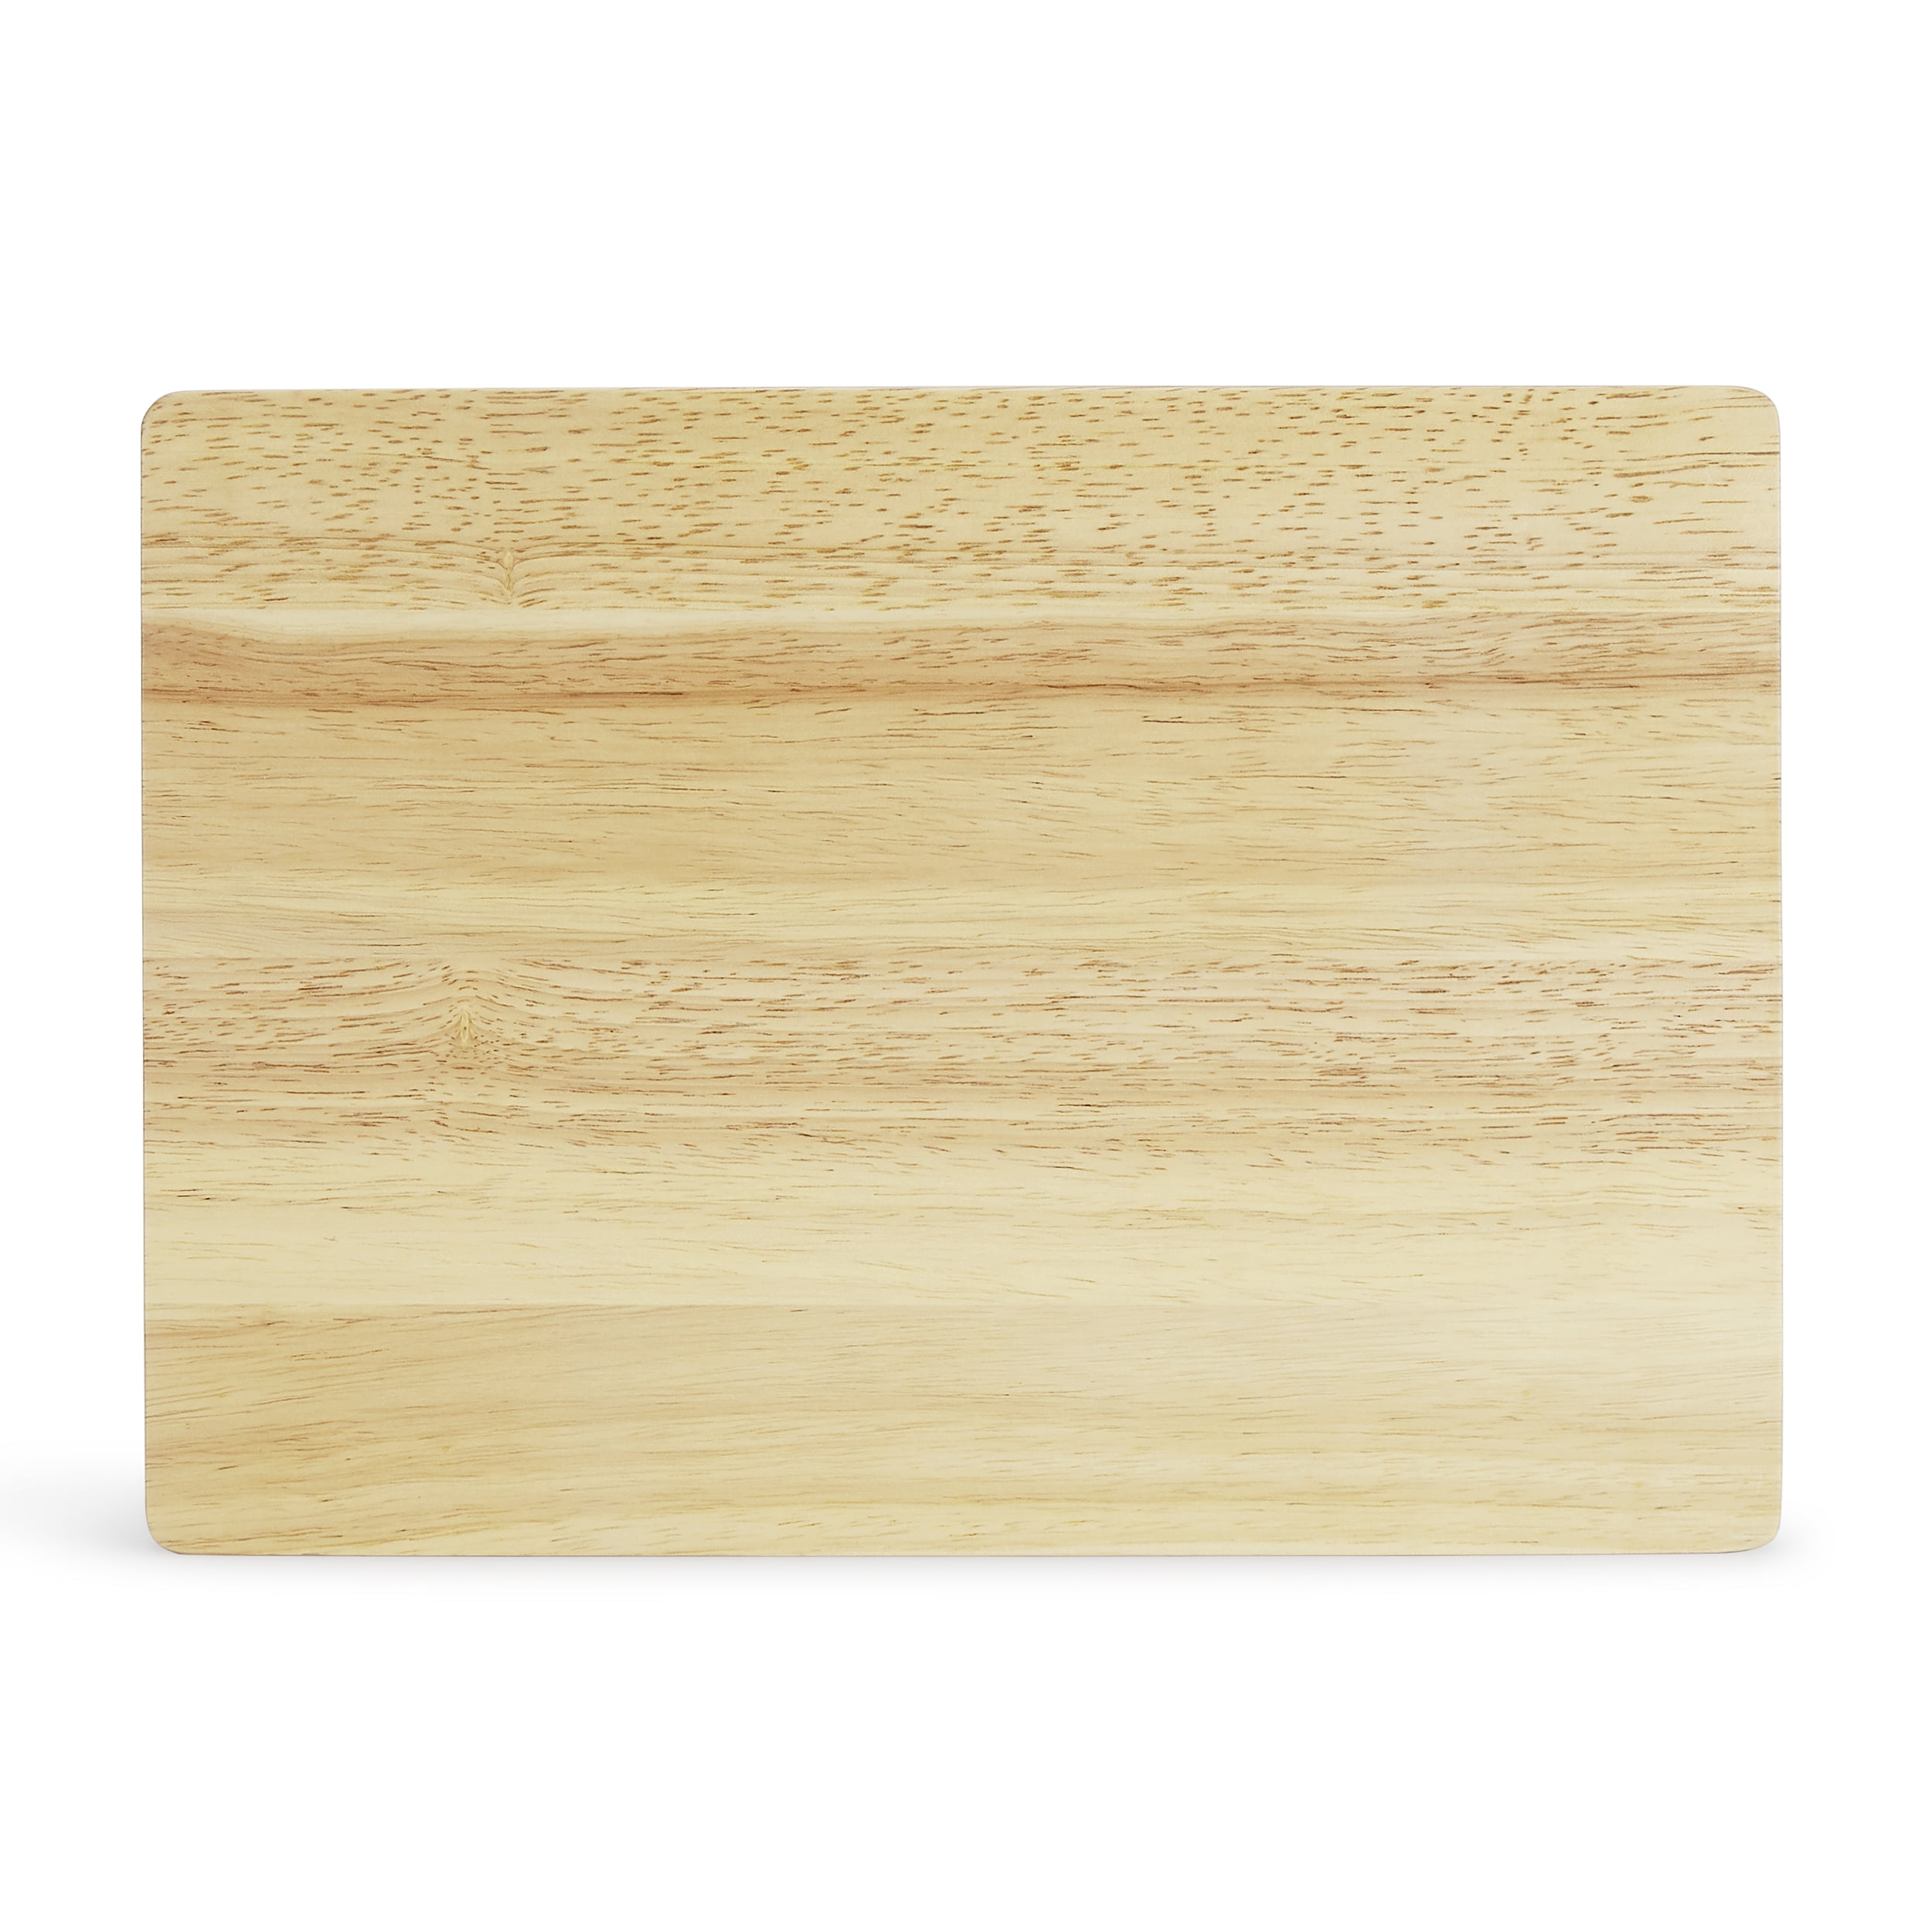 MakerFlo Handmade Bamboo Cutting Board 14 x 10 inch, 1 PC, Brown